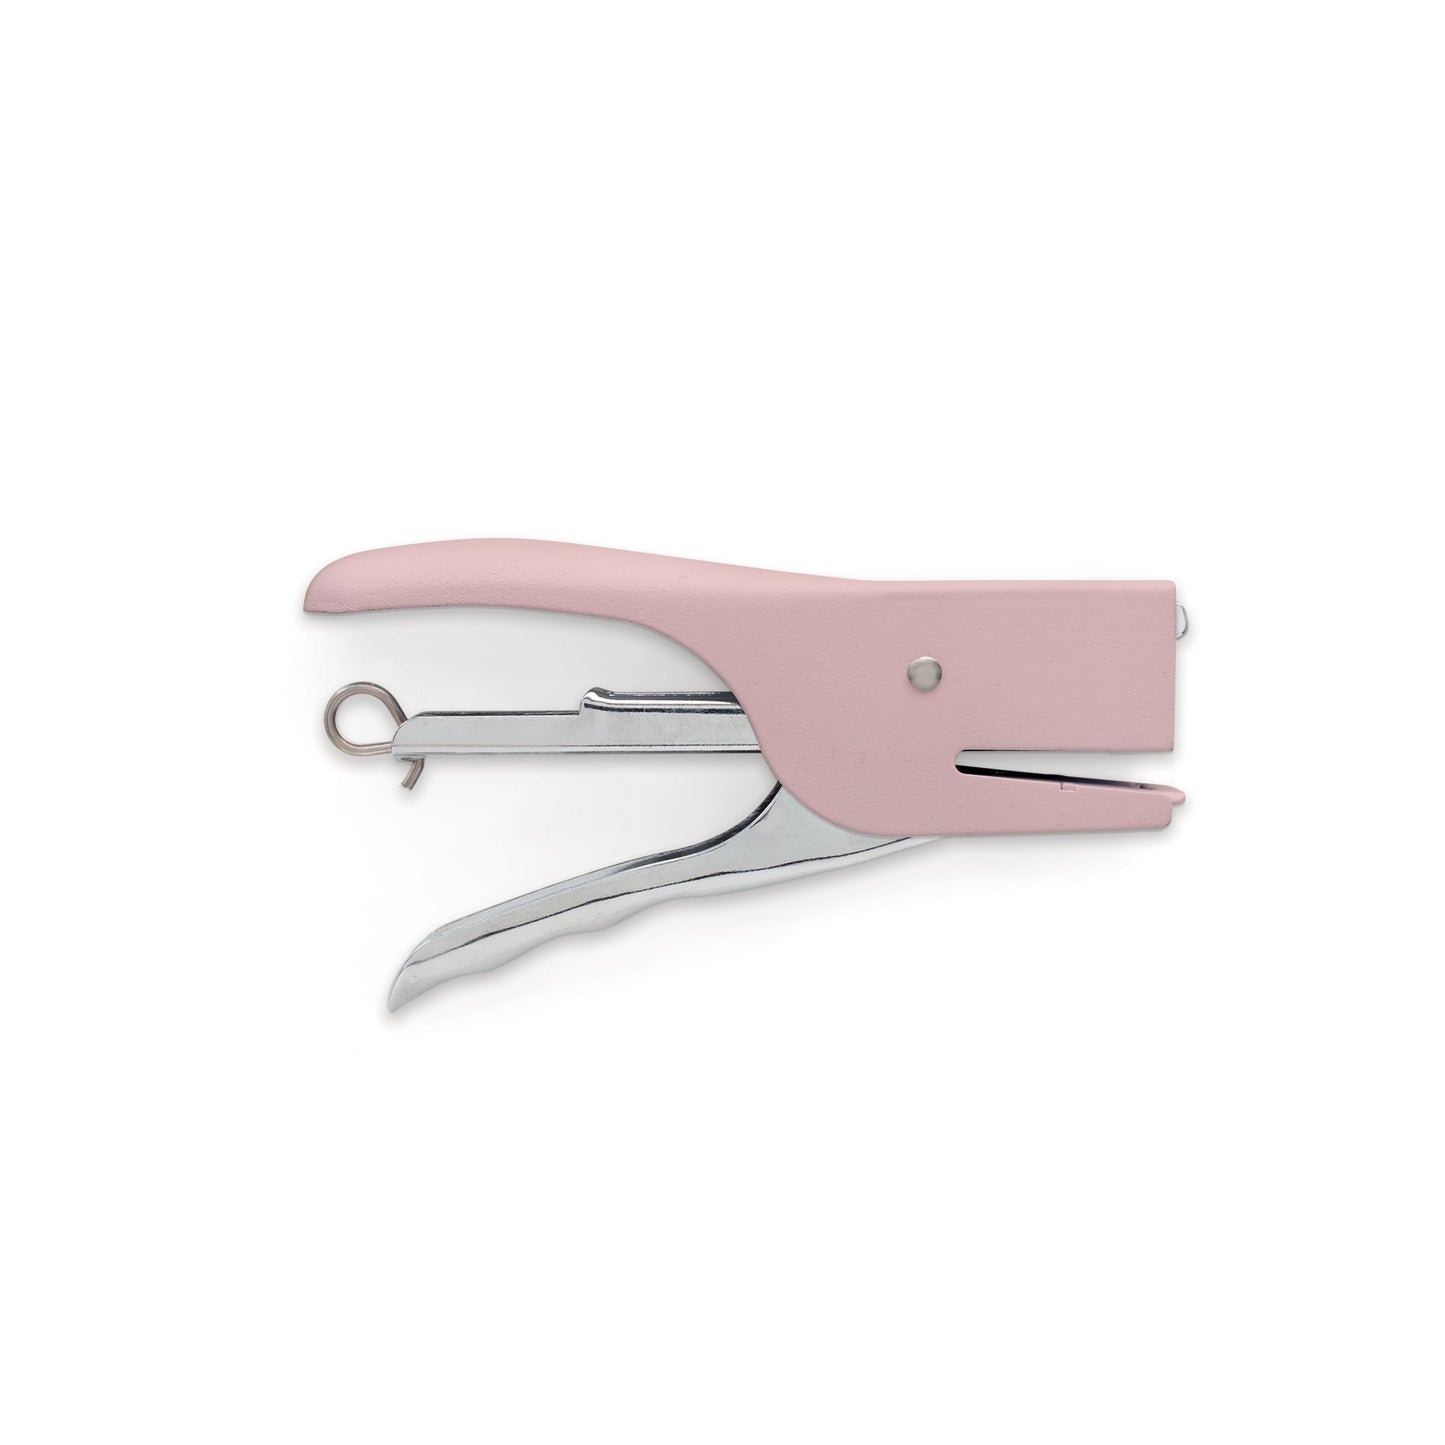 Standard Issue Stapler - Dusty Pink